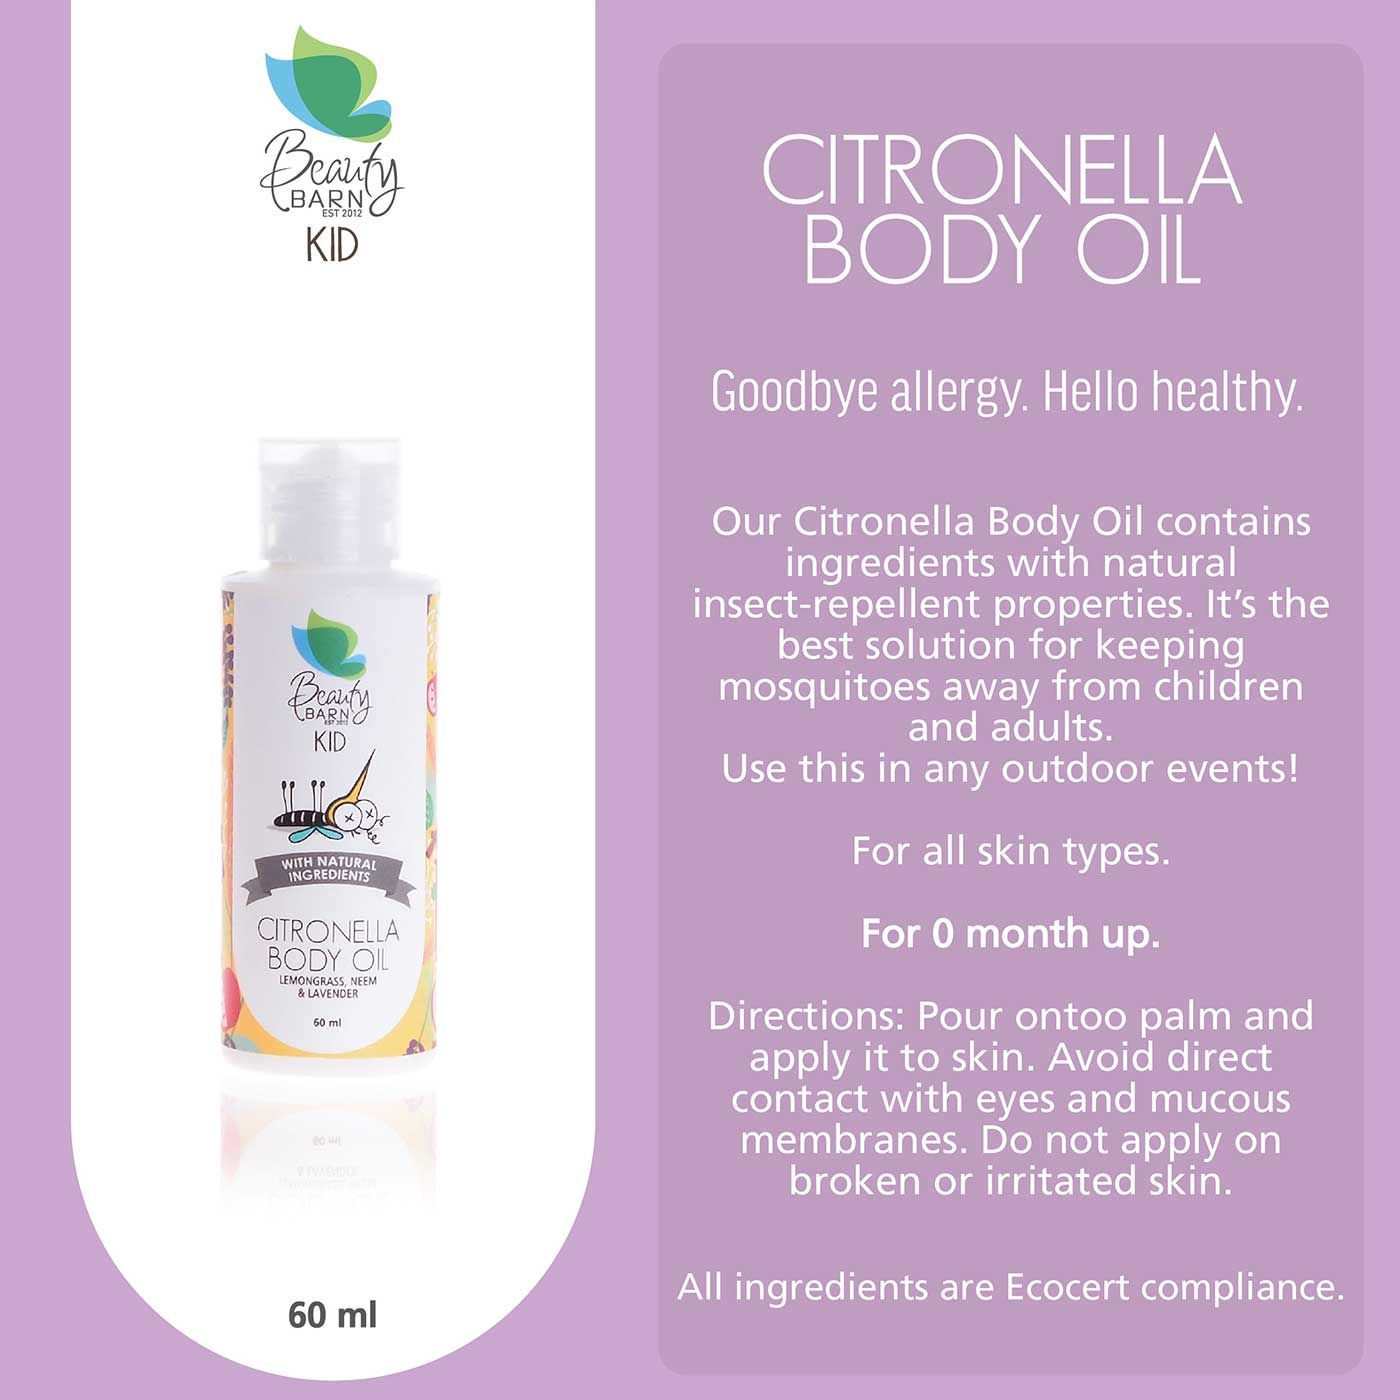 Beauty Barn Kid - Citronella Body Oil 60ml - 2